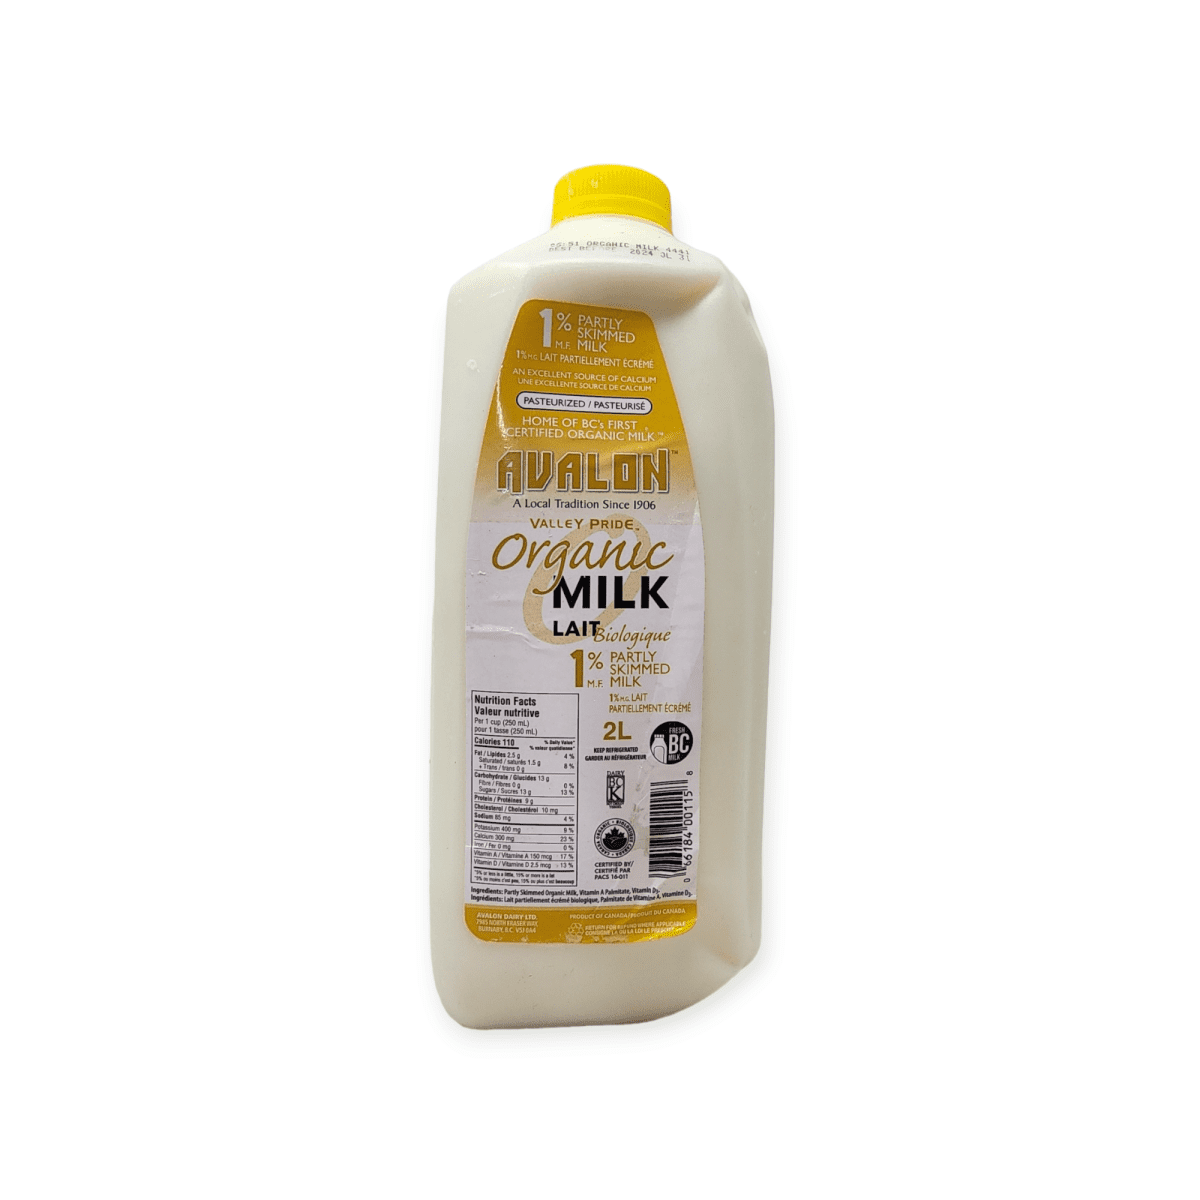 Avalon Organic Milk 1% Partly Skimmed (2L)